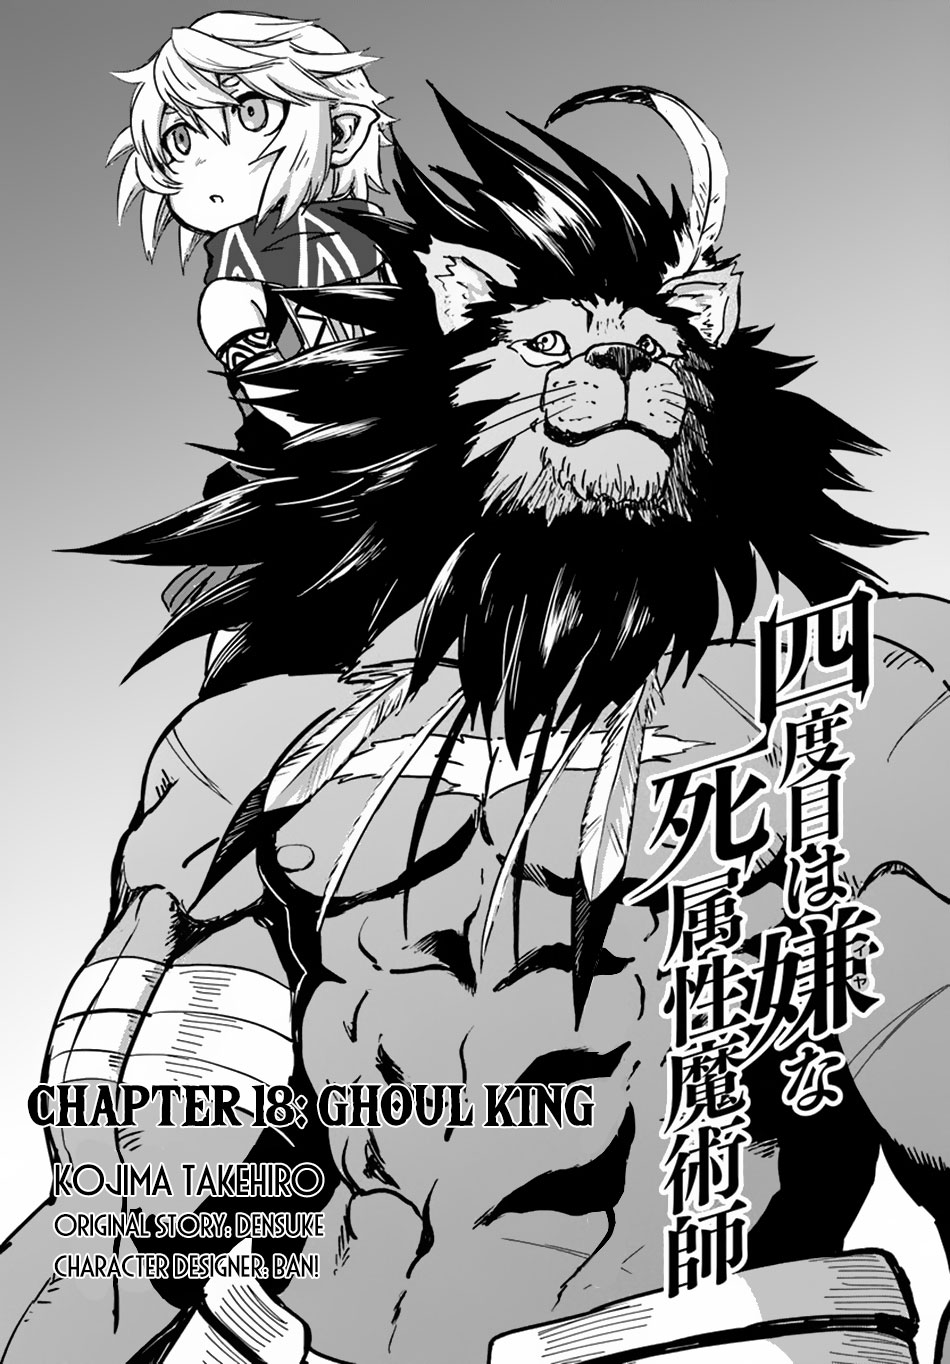 Yondome Wa Iya Na Shizokusei Majutsushi Vol.4 Chapter 18: Ghoul King - Picture 3